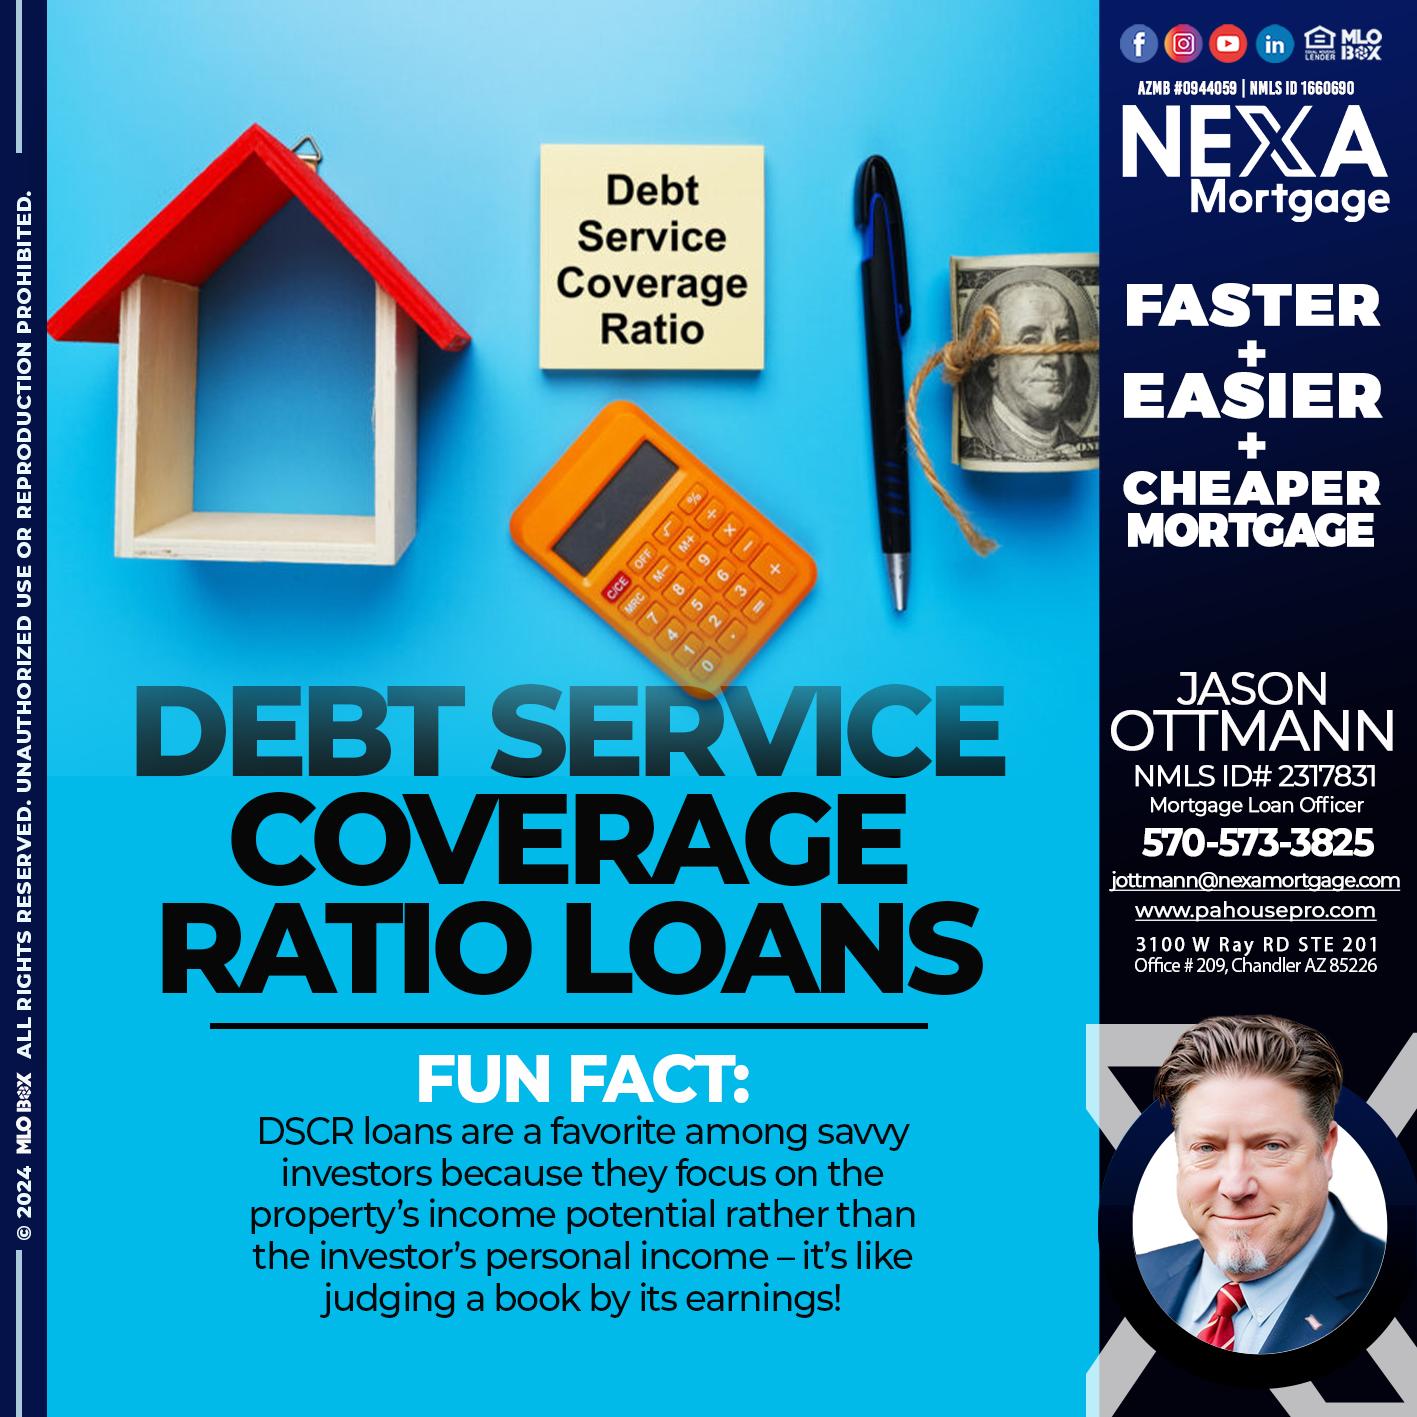 DEBT - Jason Ottmann -Mortgage Loan Officer